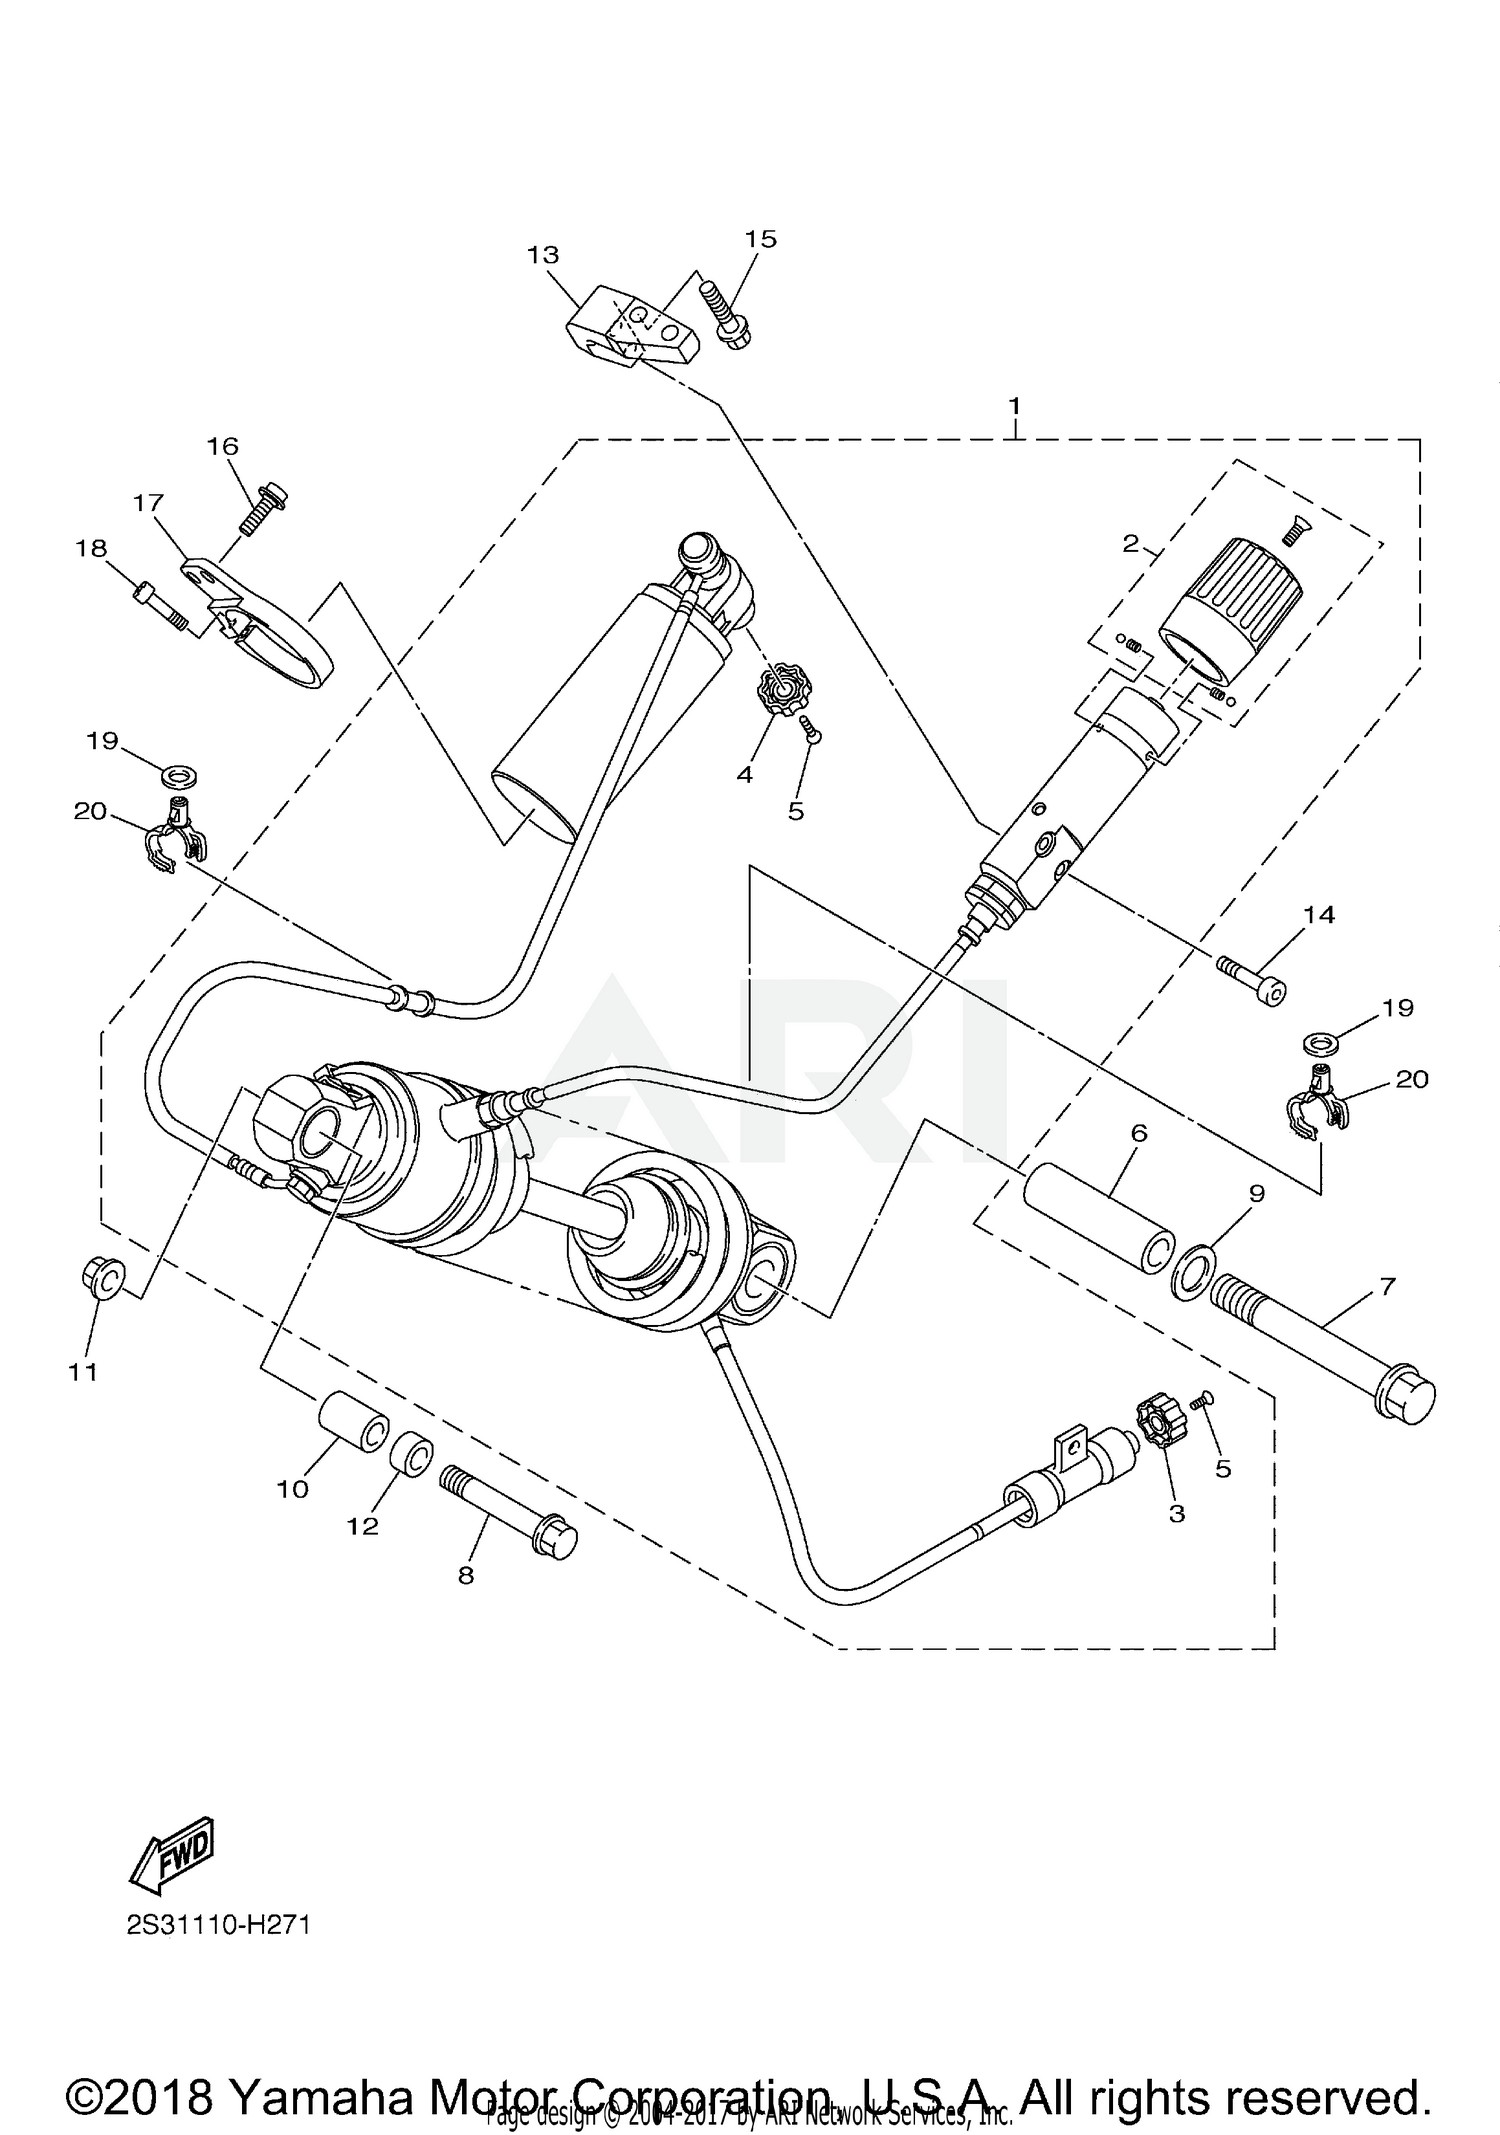 Front Suspension Parts Diagram 2018 Yamaha V Max Vmx17jcgy Rear Suspension Parts Best Of Front Suspension Parts Diagram